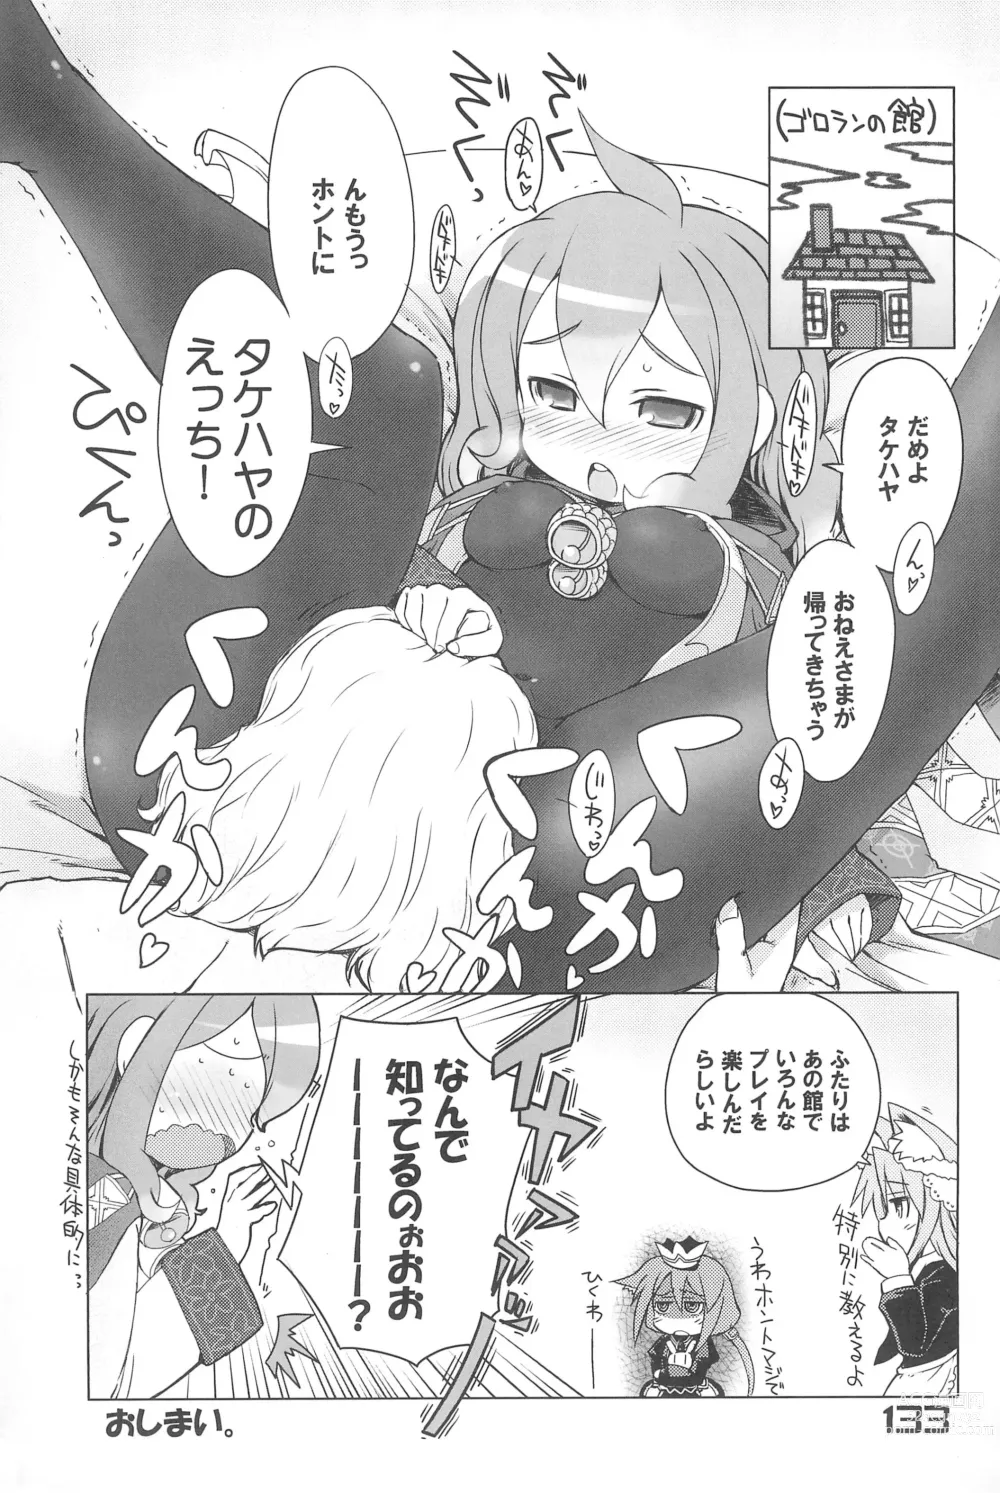 Page 133 of doujinshi Nana*Dra 2